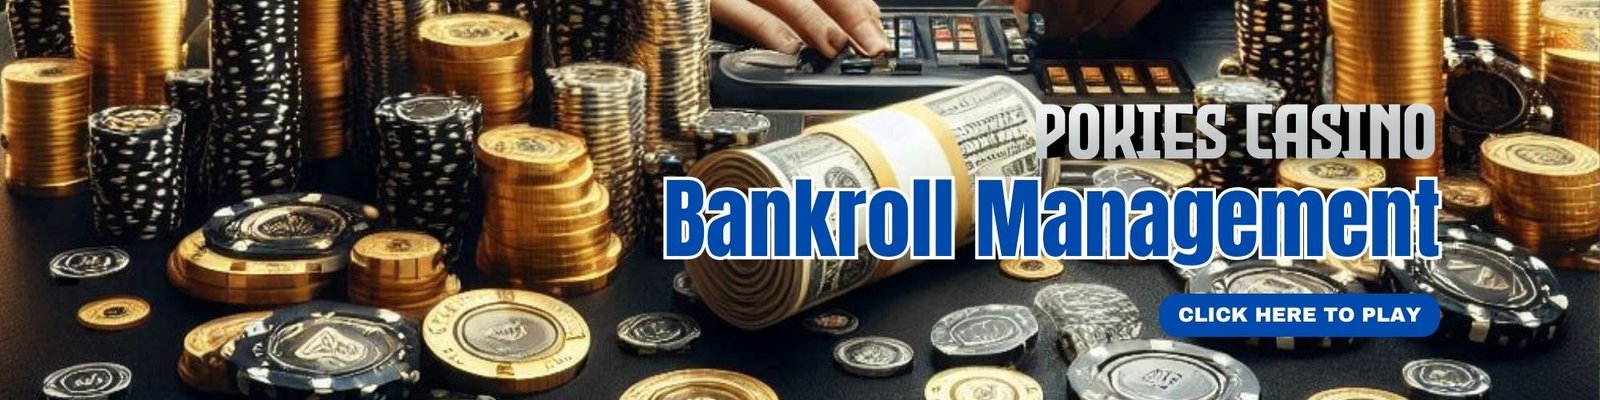 Bankroll Management in PokiesCasino